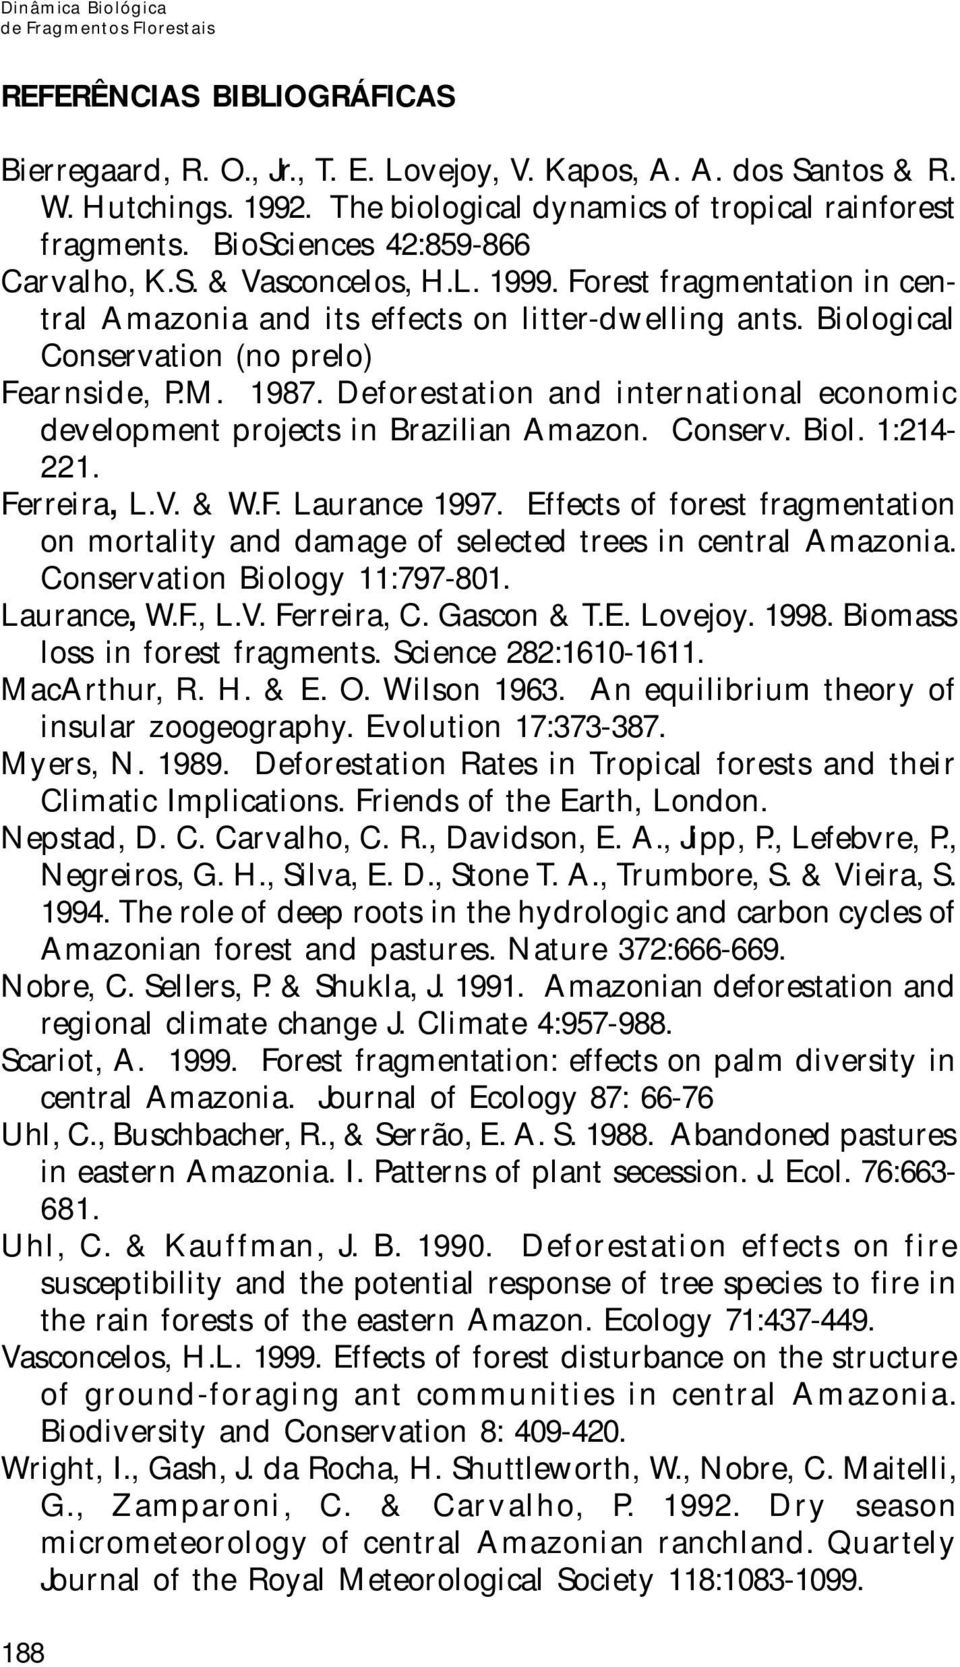 1987. Deforestation and international economic development projects in Brazilian Amazon. Conserv. Biol. 1:214-221. Ferreira, L.V. & W.F. Laurance 1997.